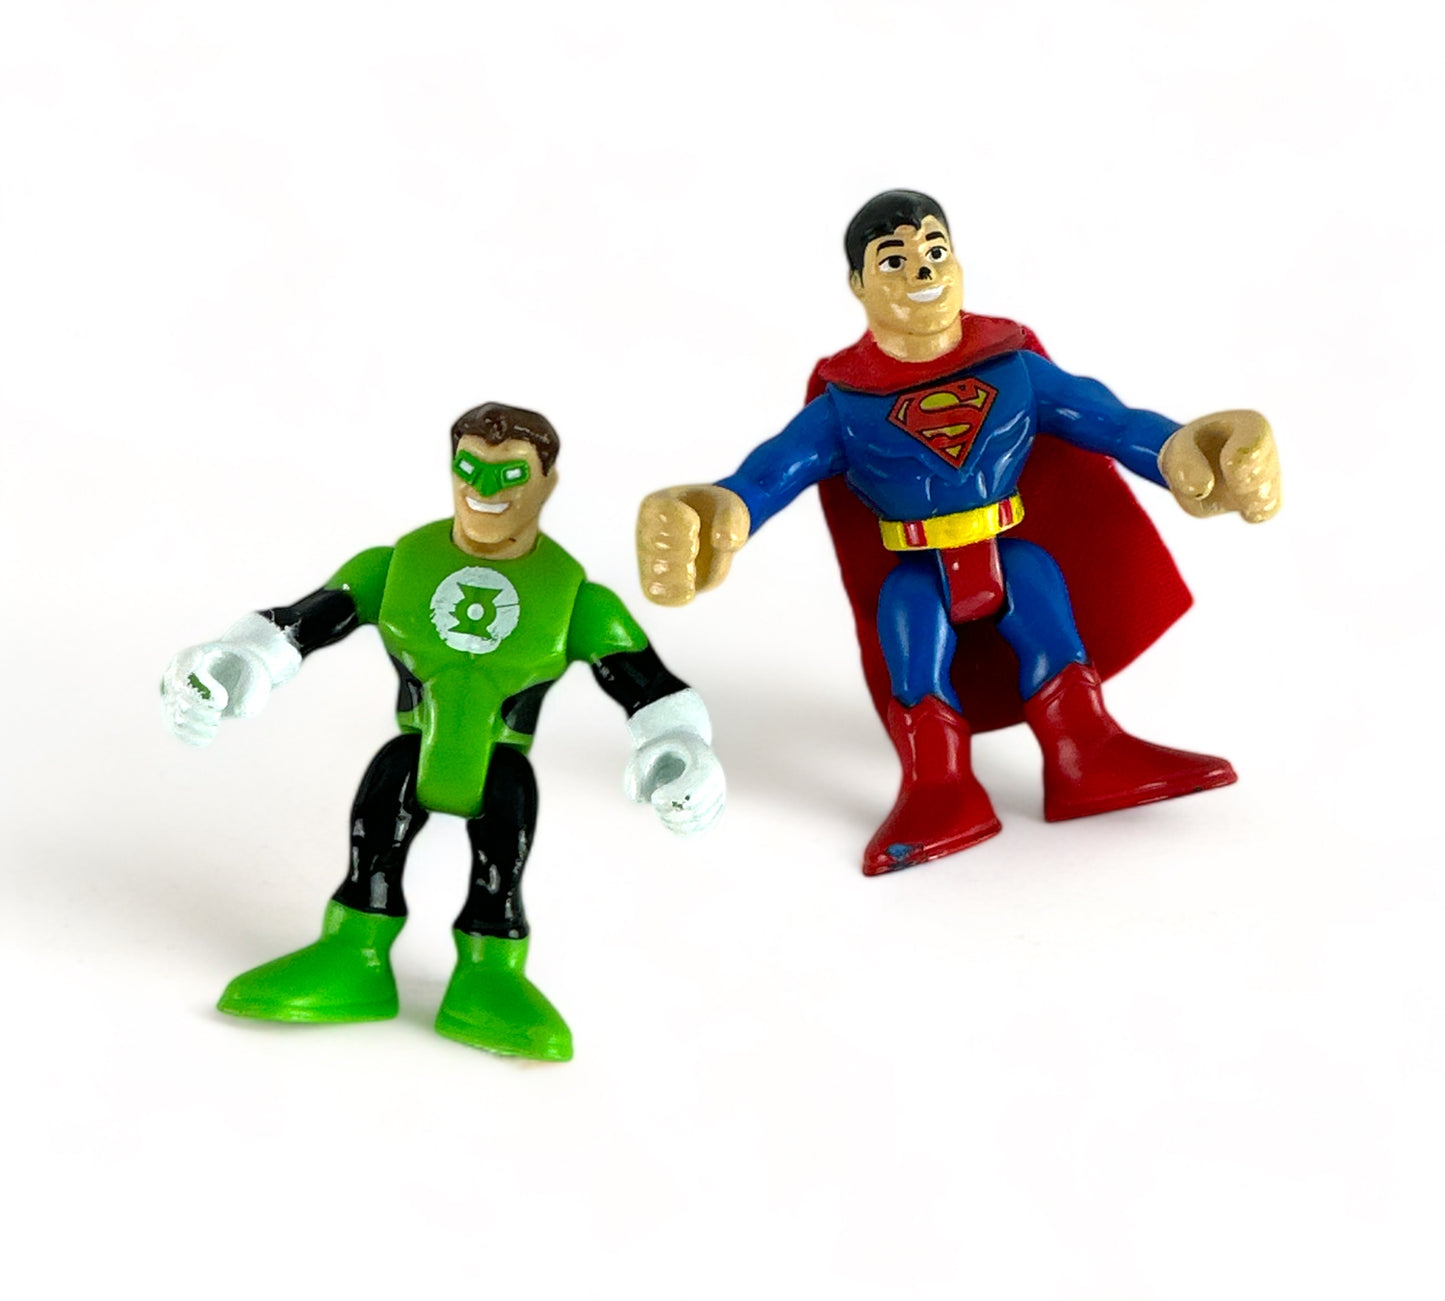 Superfriends Superman and Green Lantern